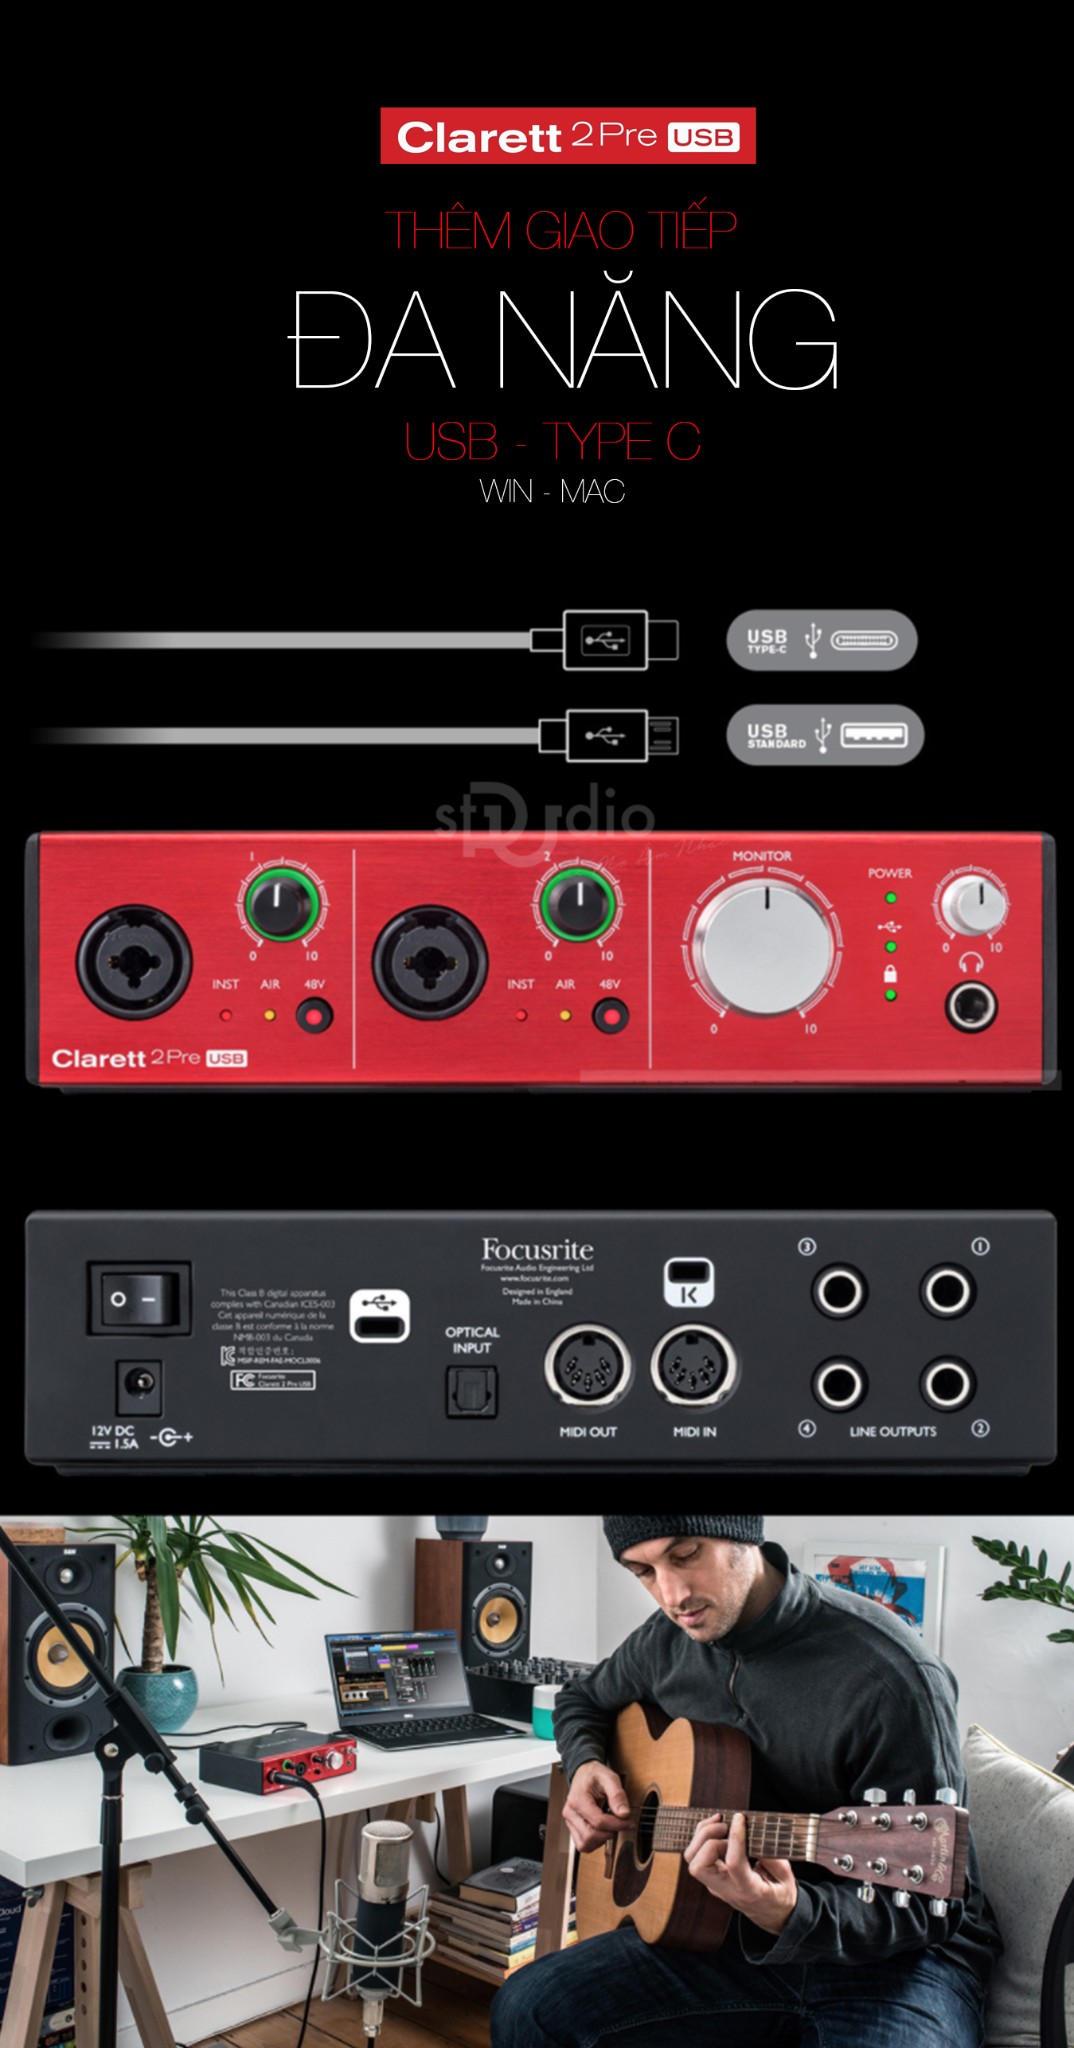 Soundcard Focusrite Scarlett 2Pre USB - Interface thu âm cao cấp